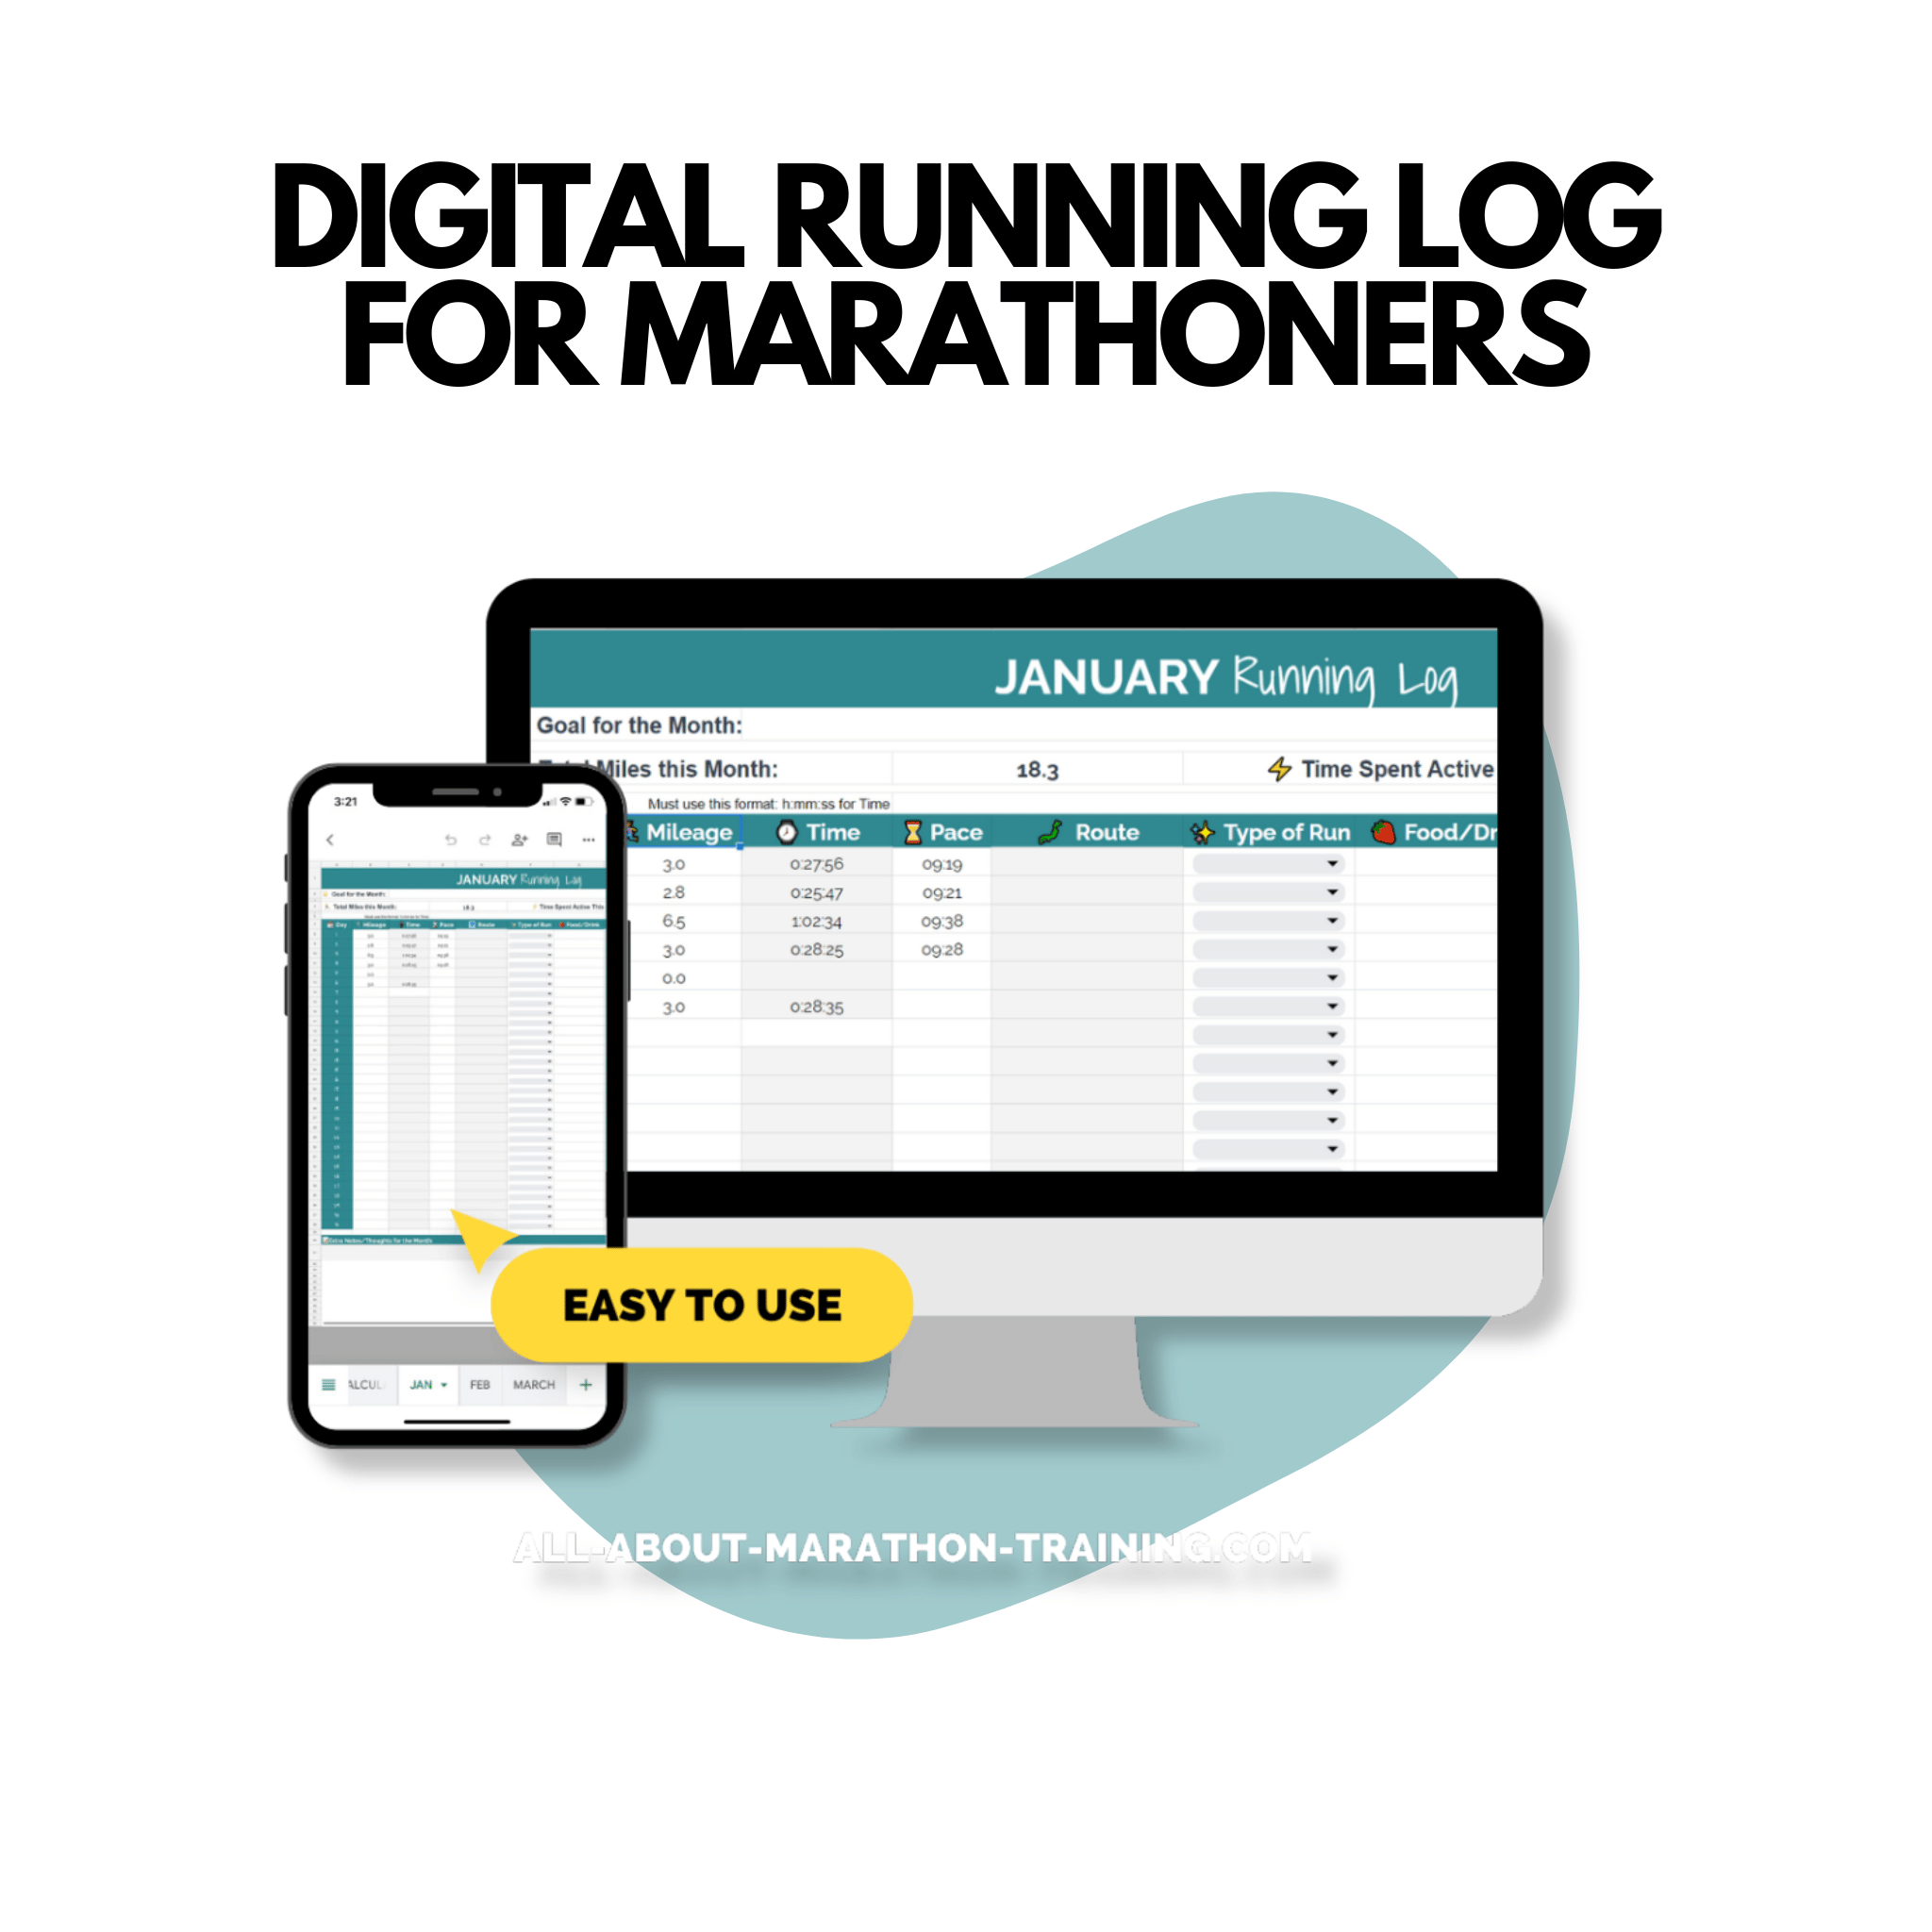 This is the mockup of the Digital Running Log for Marathoners Google Spreadsheet